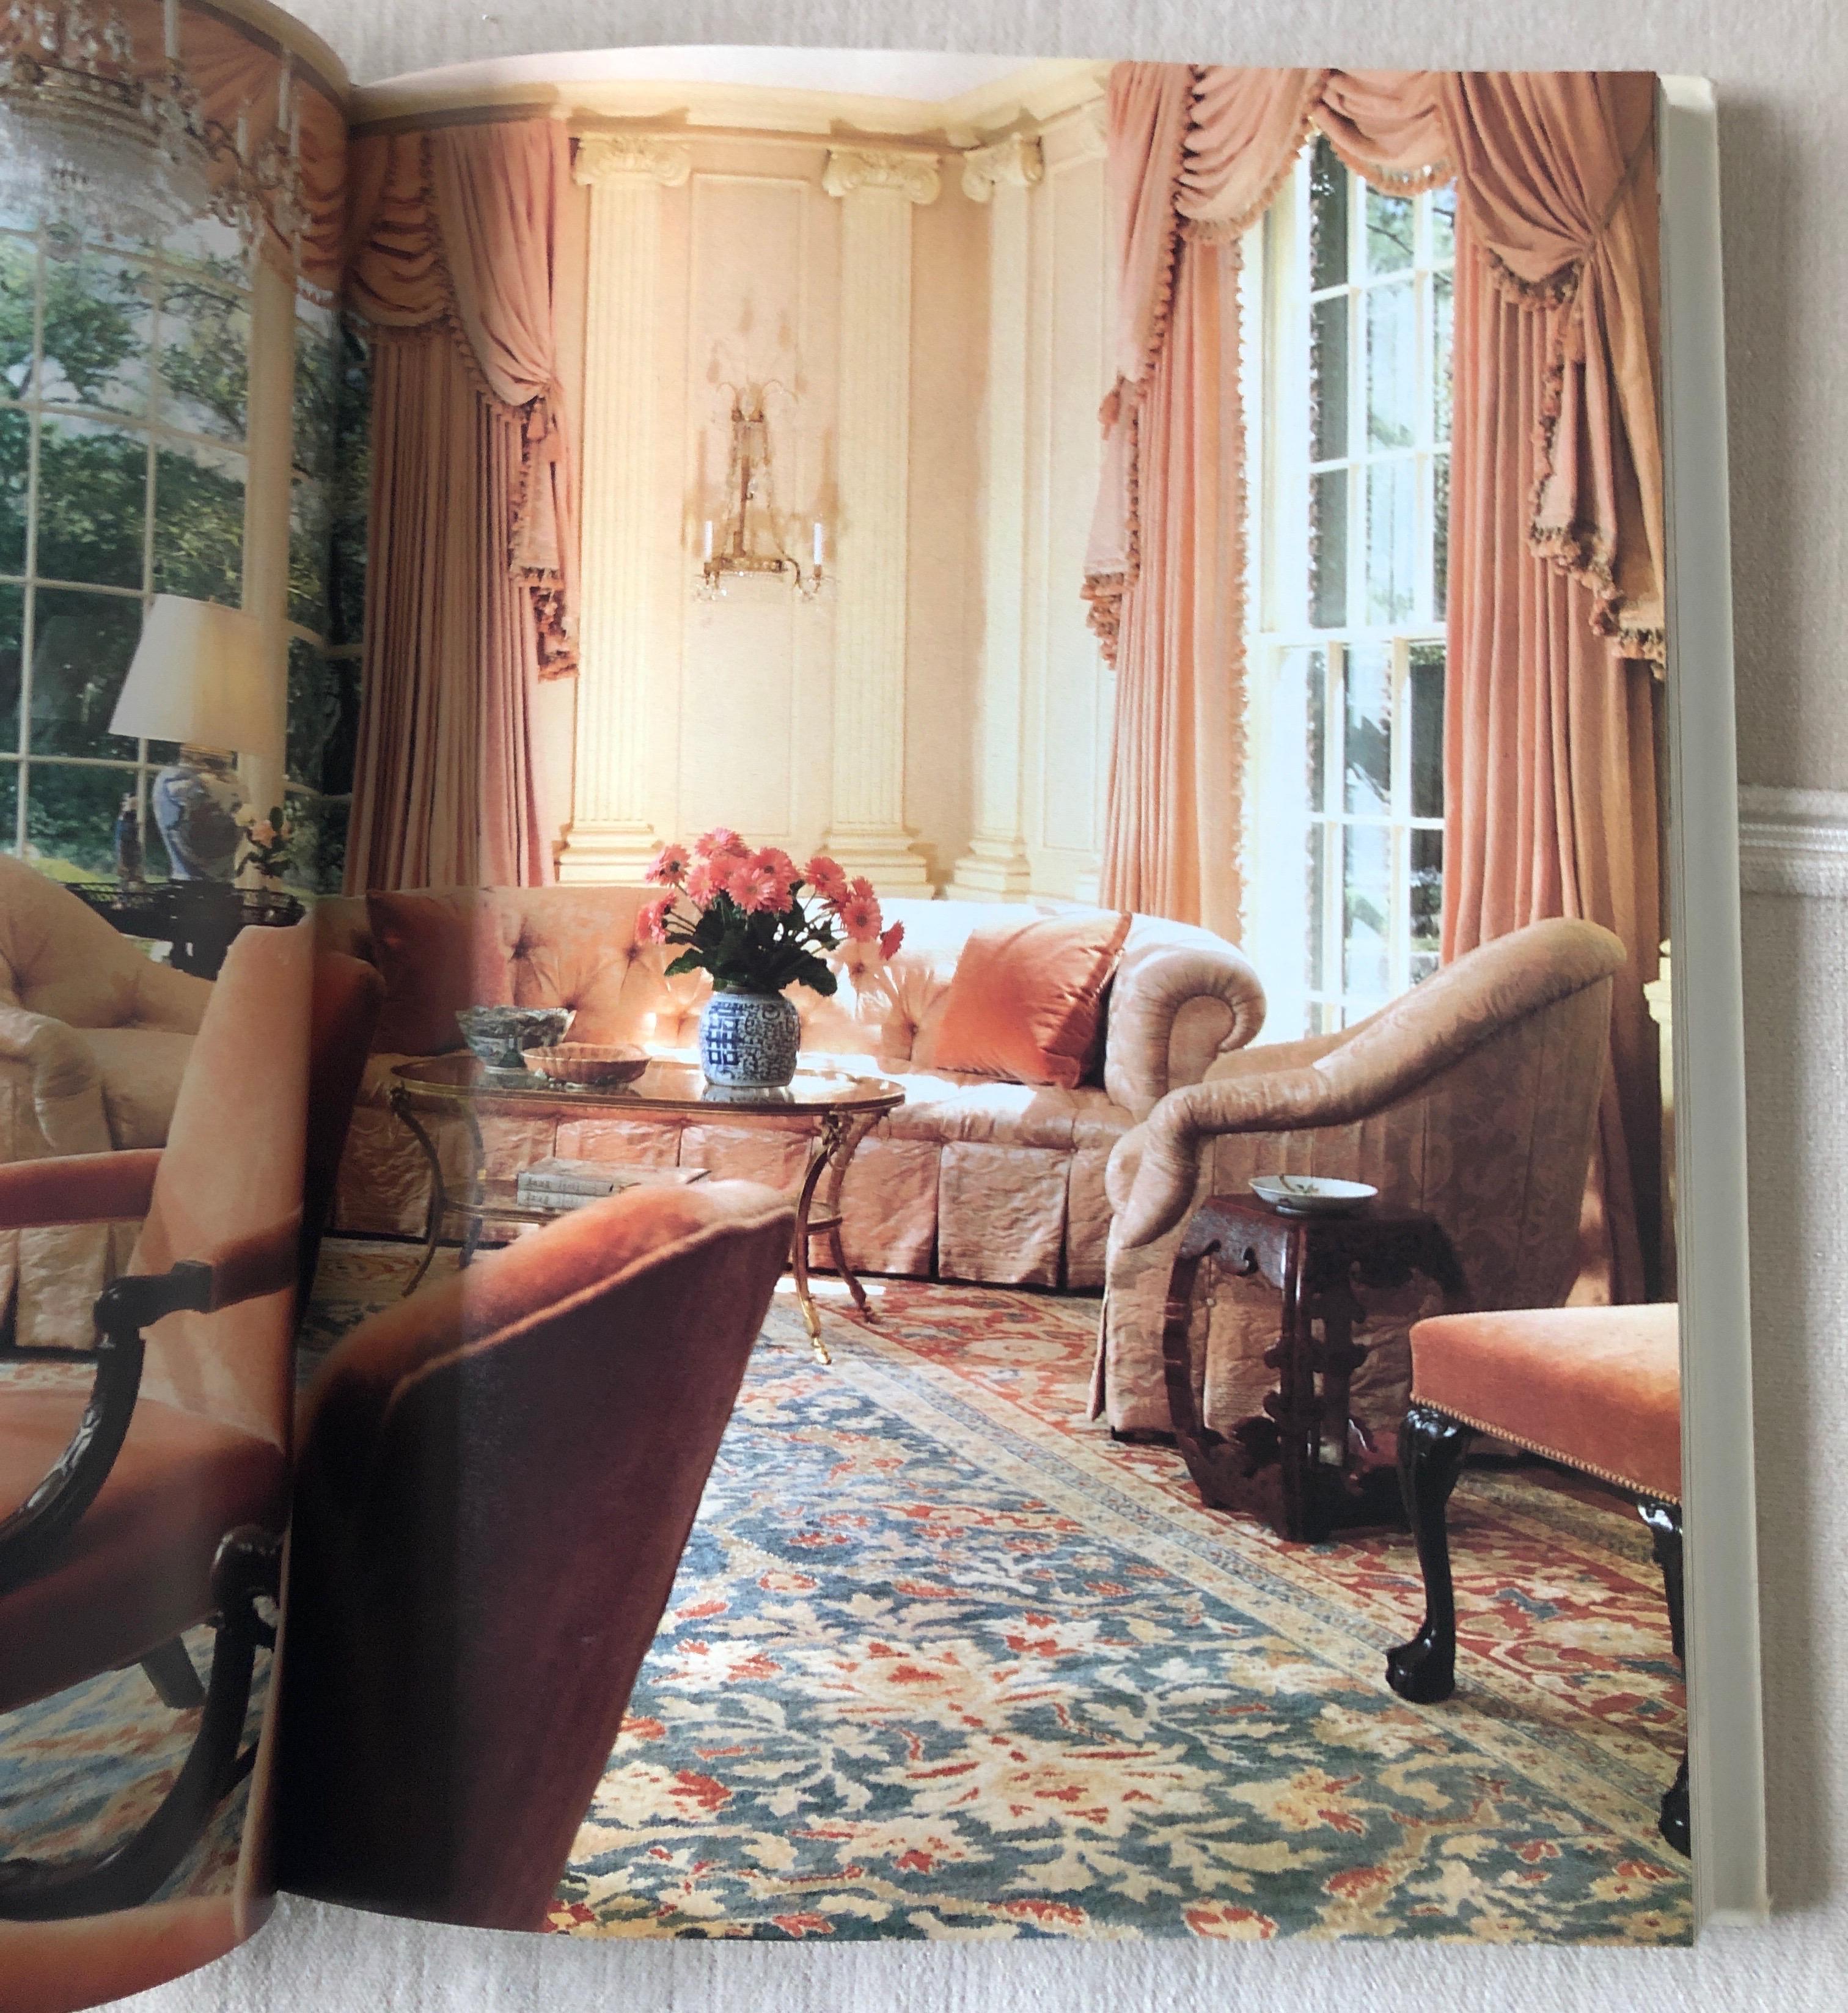 American Best in Decoration Book by House & Garden Magazine